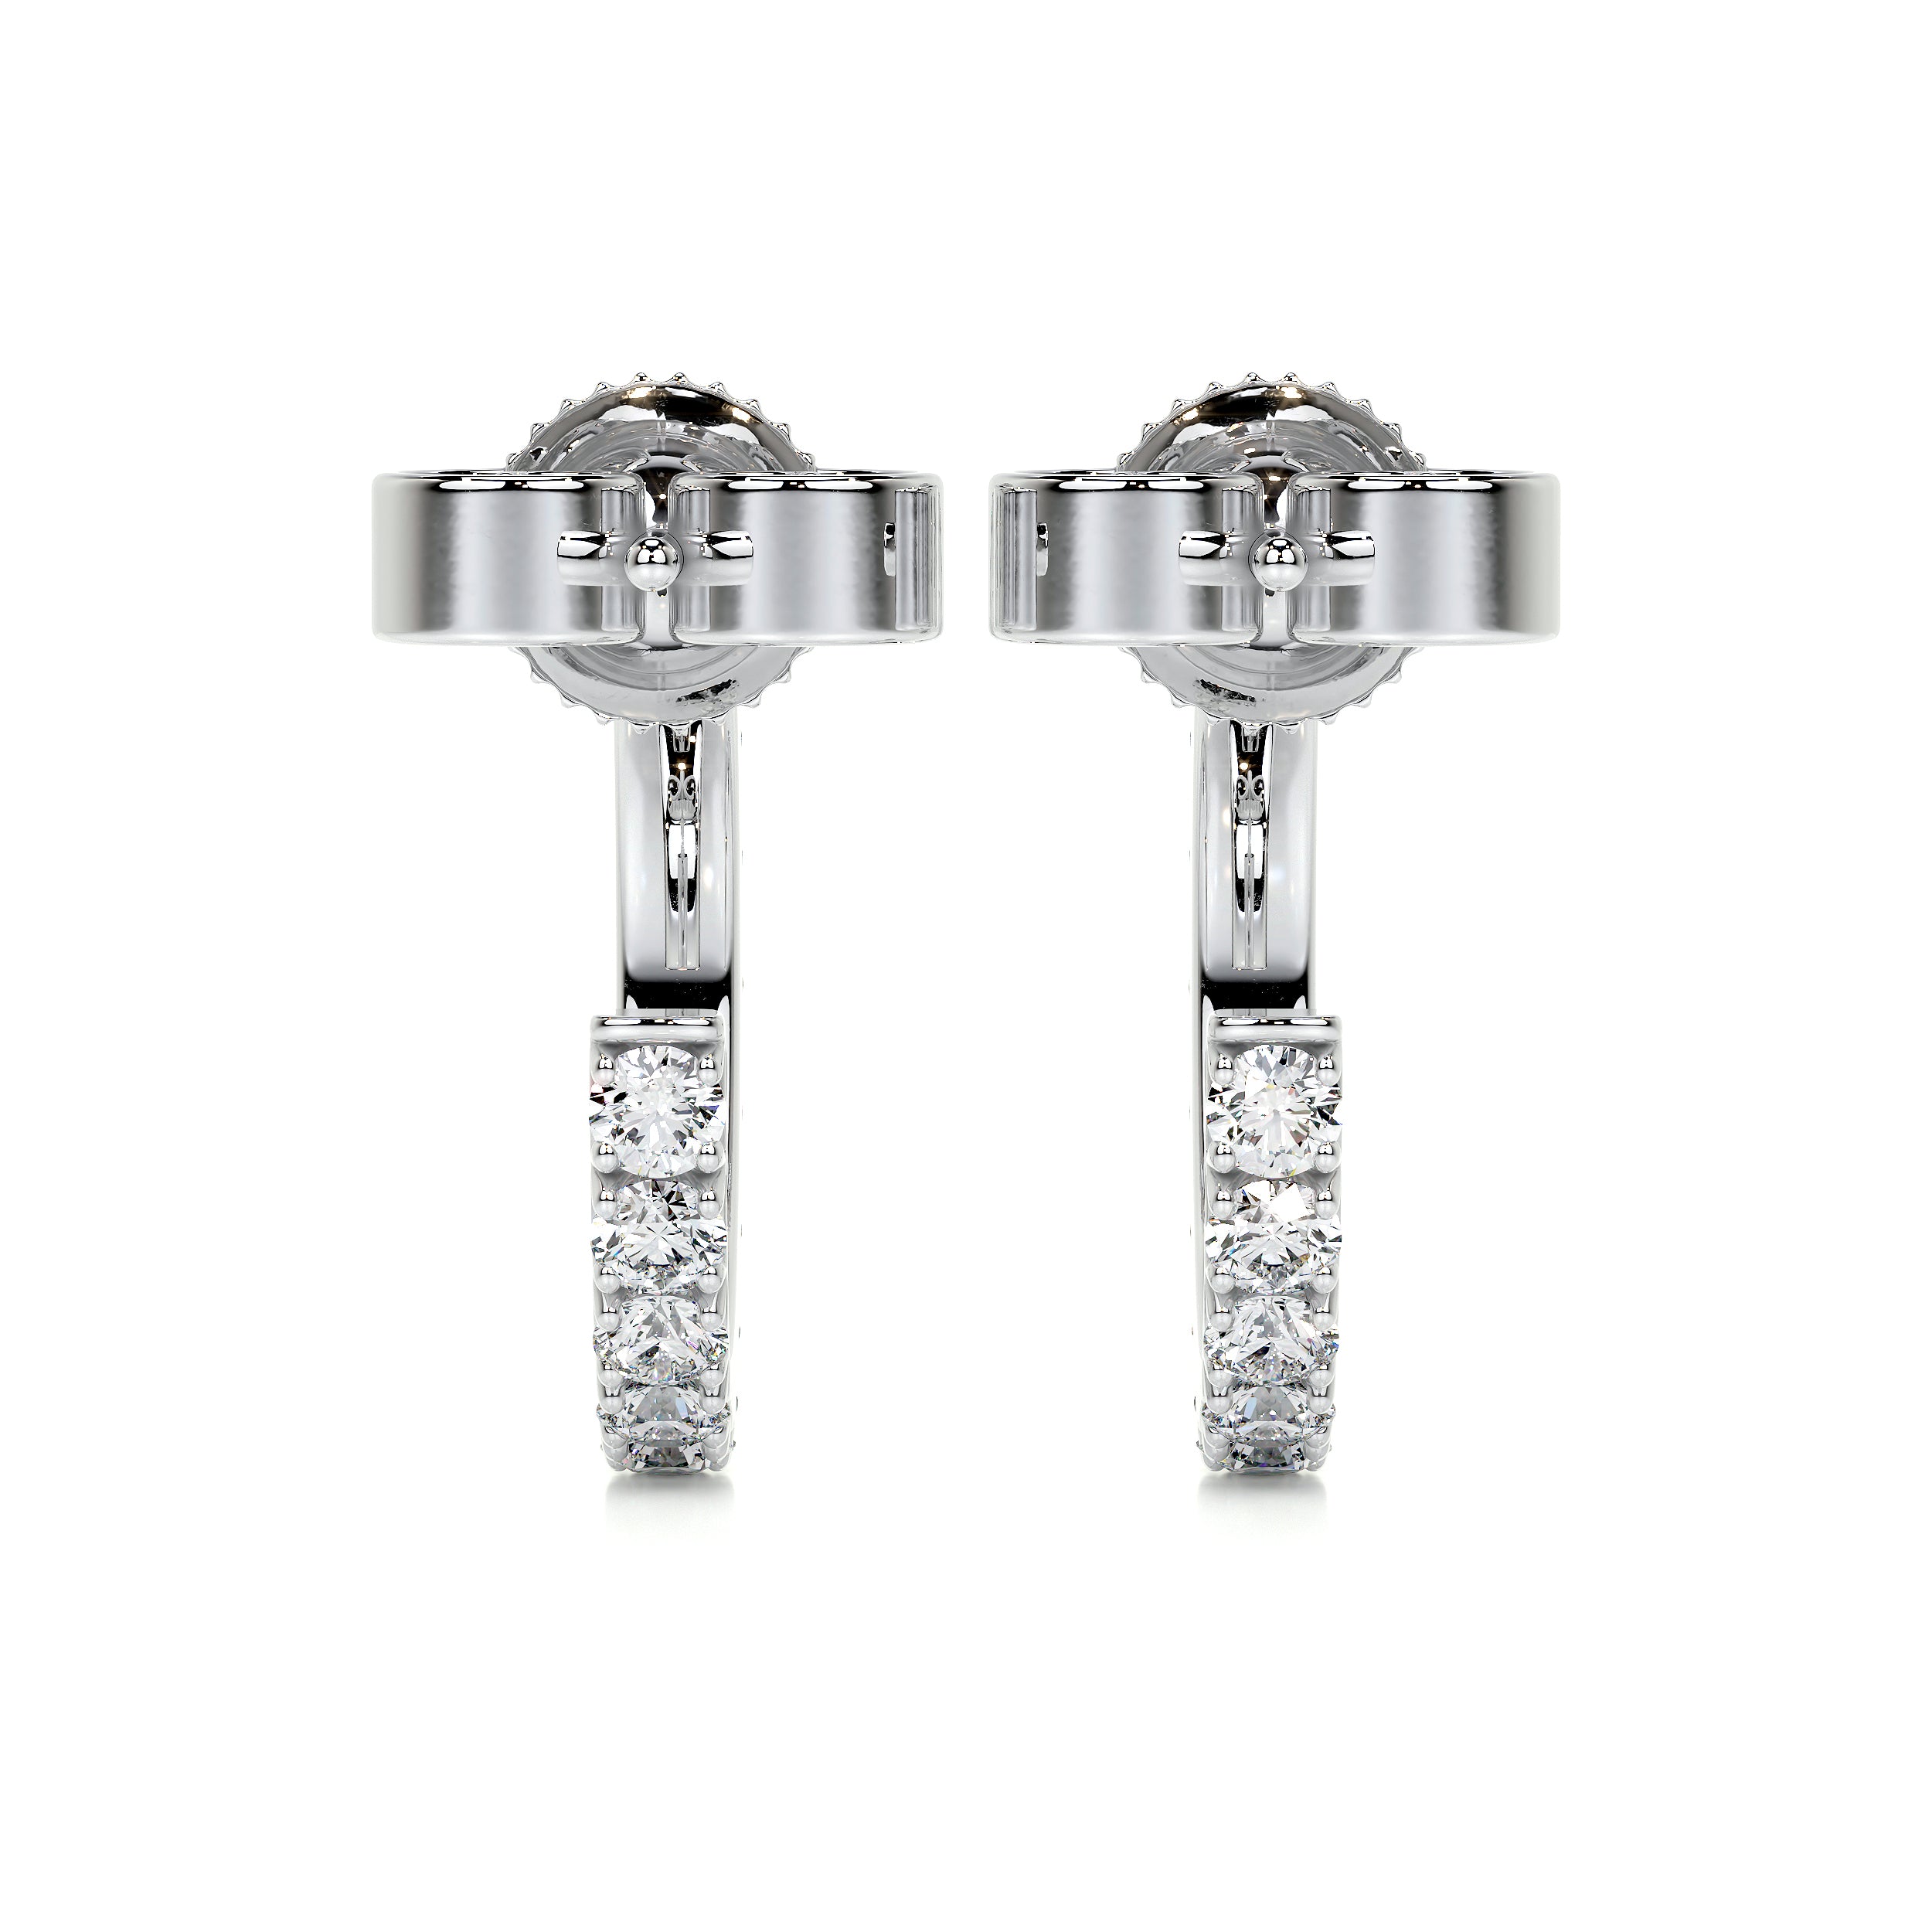 Nicole Diamond Earrings   (3 Carat) -14K White Gold